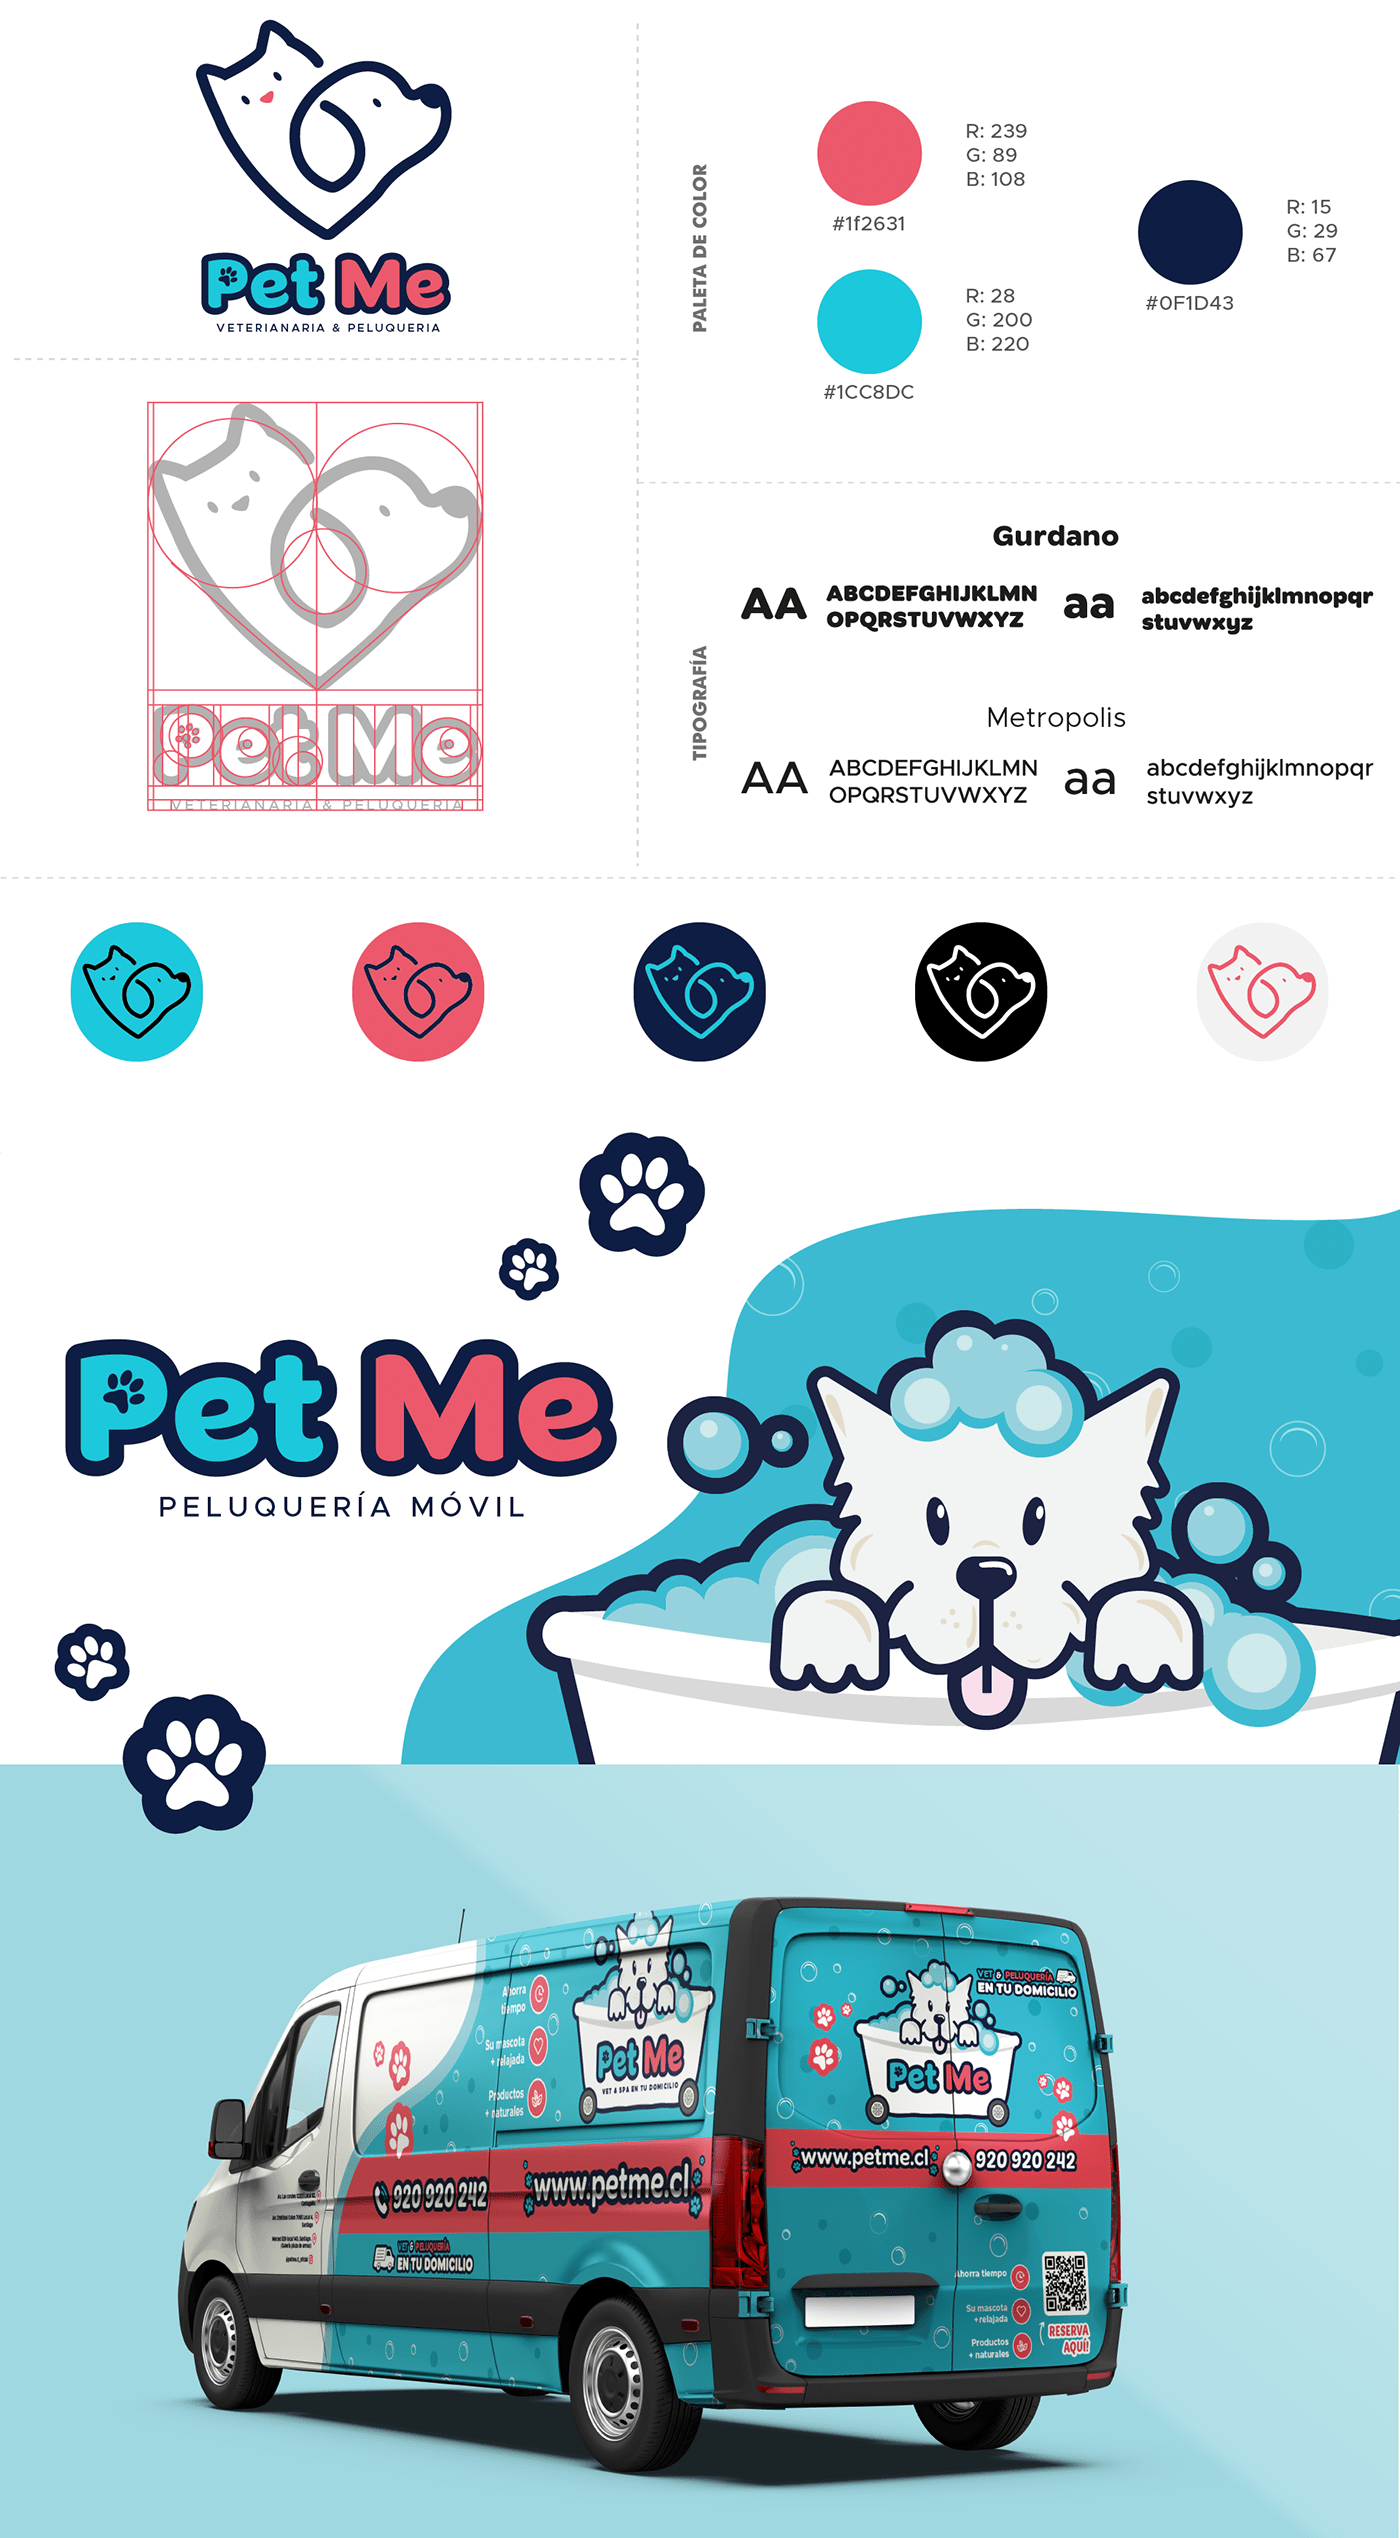 Logo Design brand identity Logotype veterinaria Pet design gráfico visual identity brand plotter Ploteo vehicular